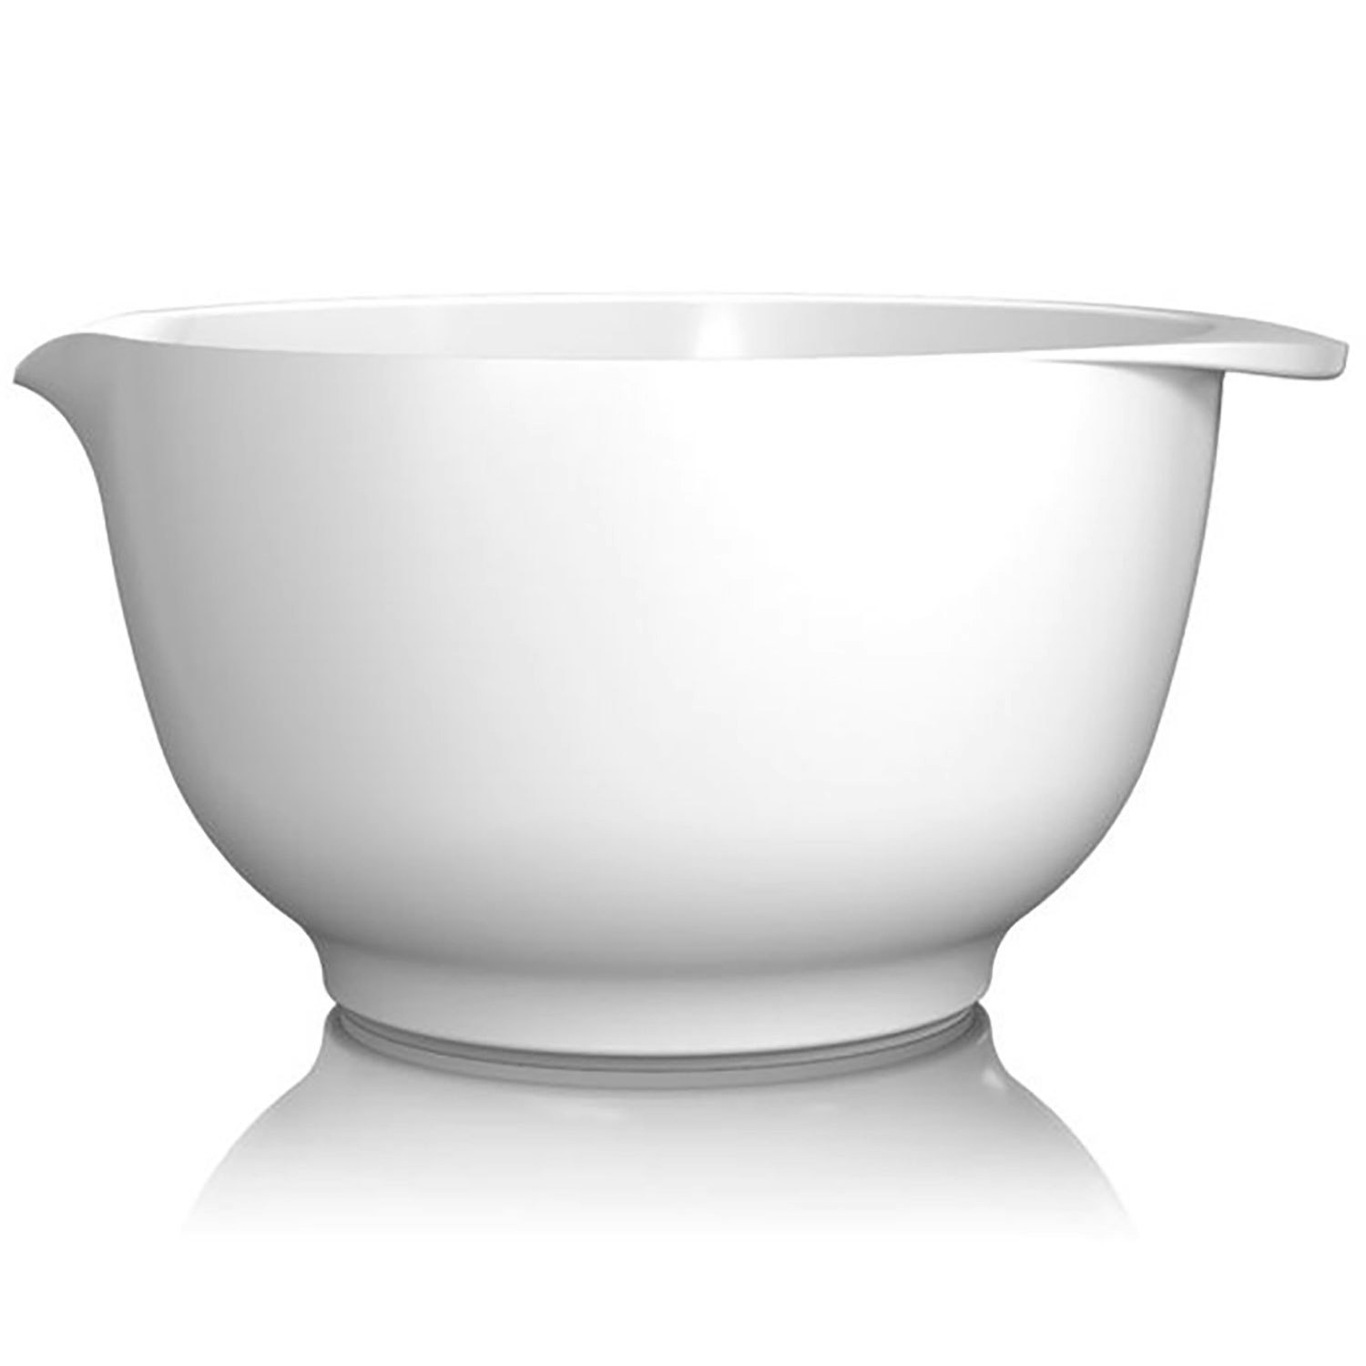 https://royaldesign.com/image/2/rosti-margrethe-bowl-with-vispock-30l-white-1?w=800&quality=80